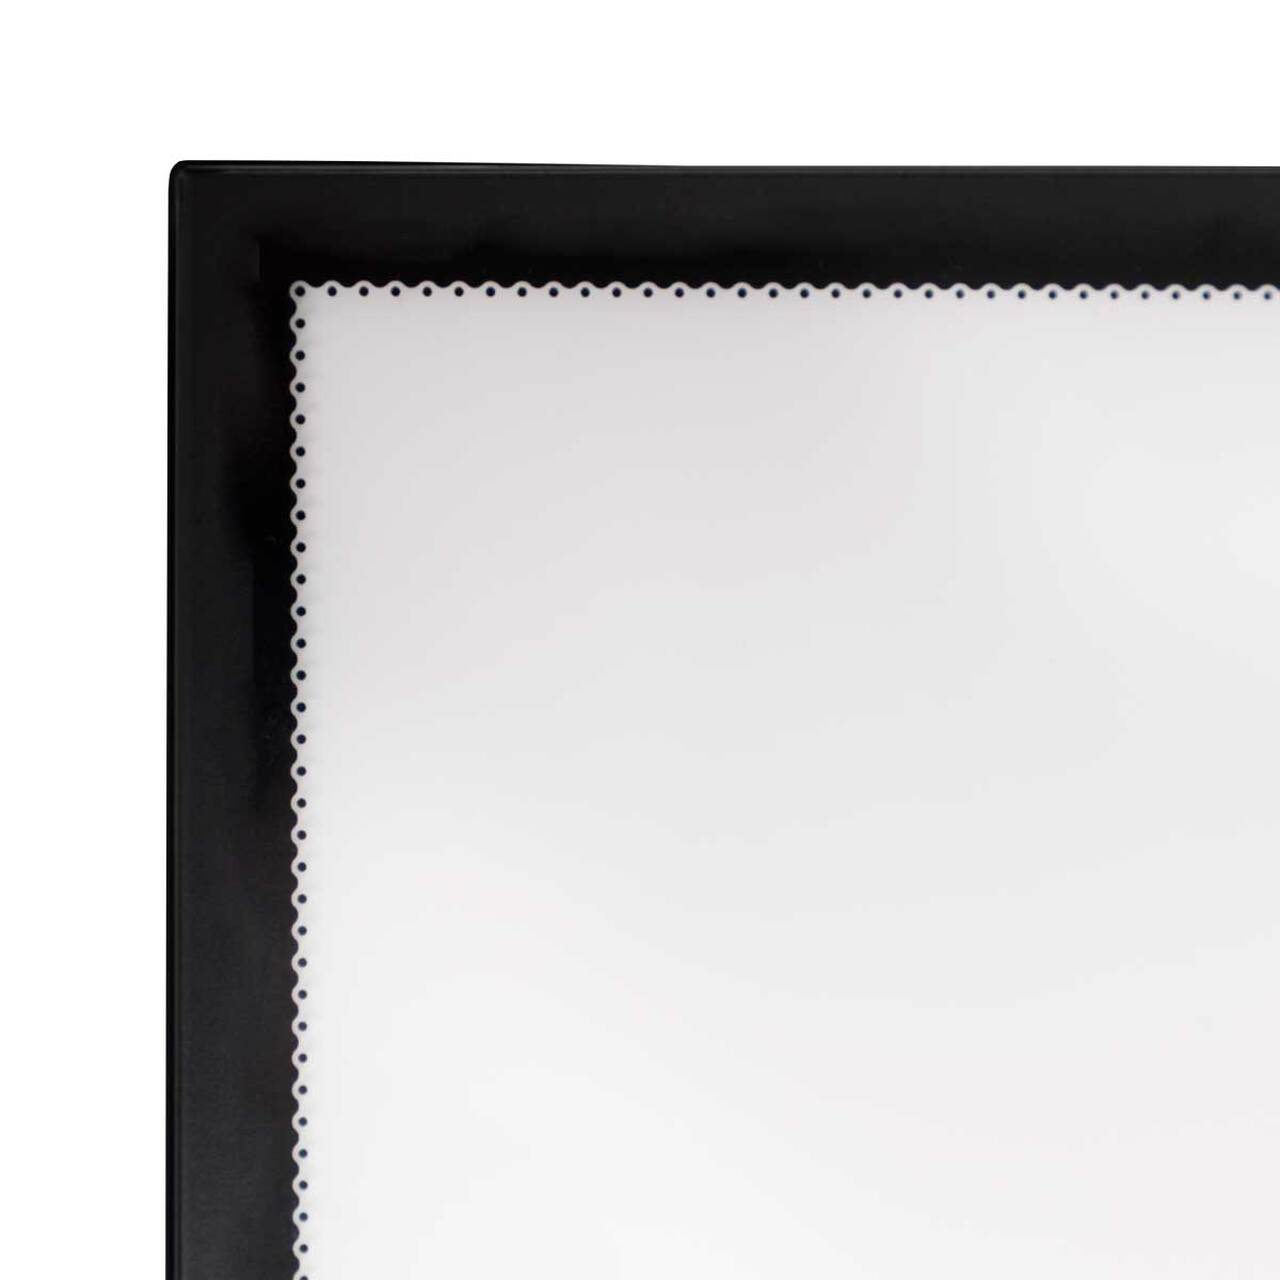 Caseta luminoasa ultra slim SLIDE-IN cu led, pentru interior, simpla fata, neagra, format print A1